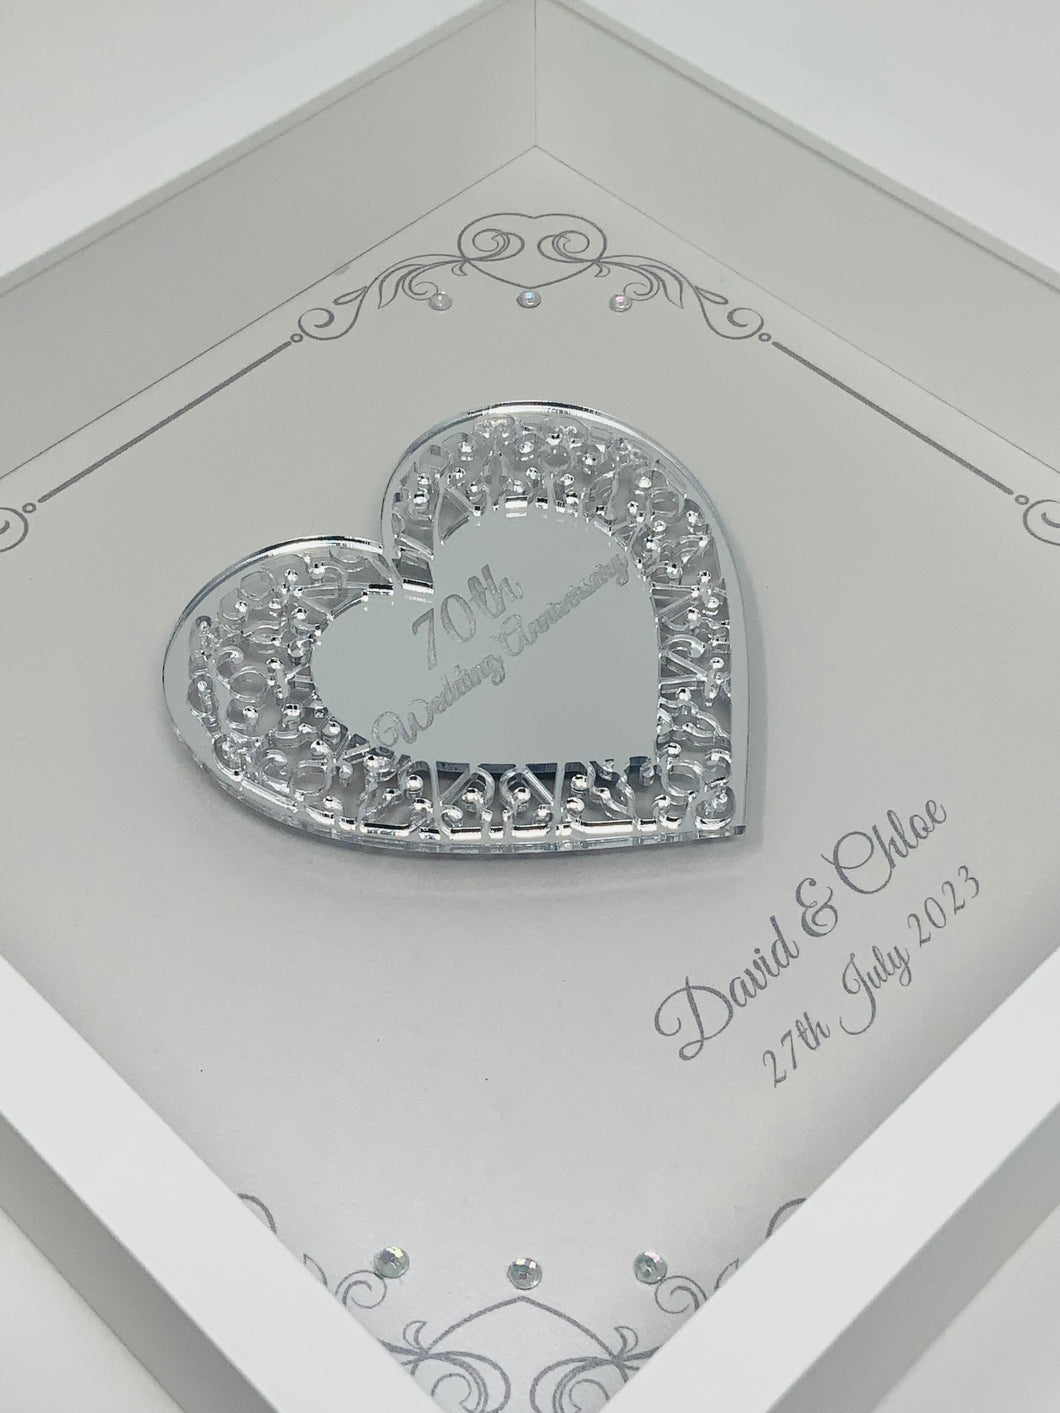 70th Platinum 70 Years Wedding Anniversary Frame - Intricate Mirror Heart